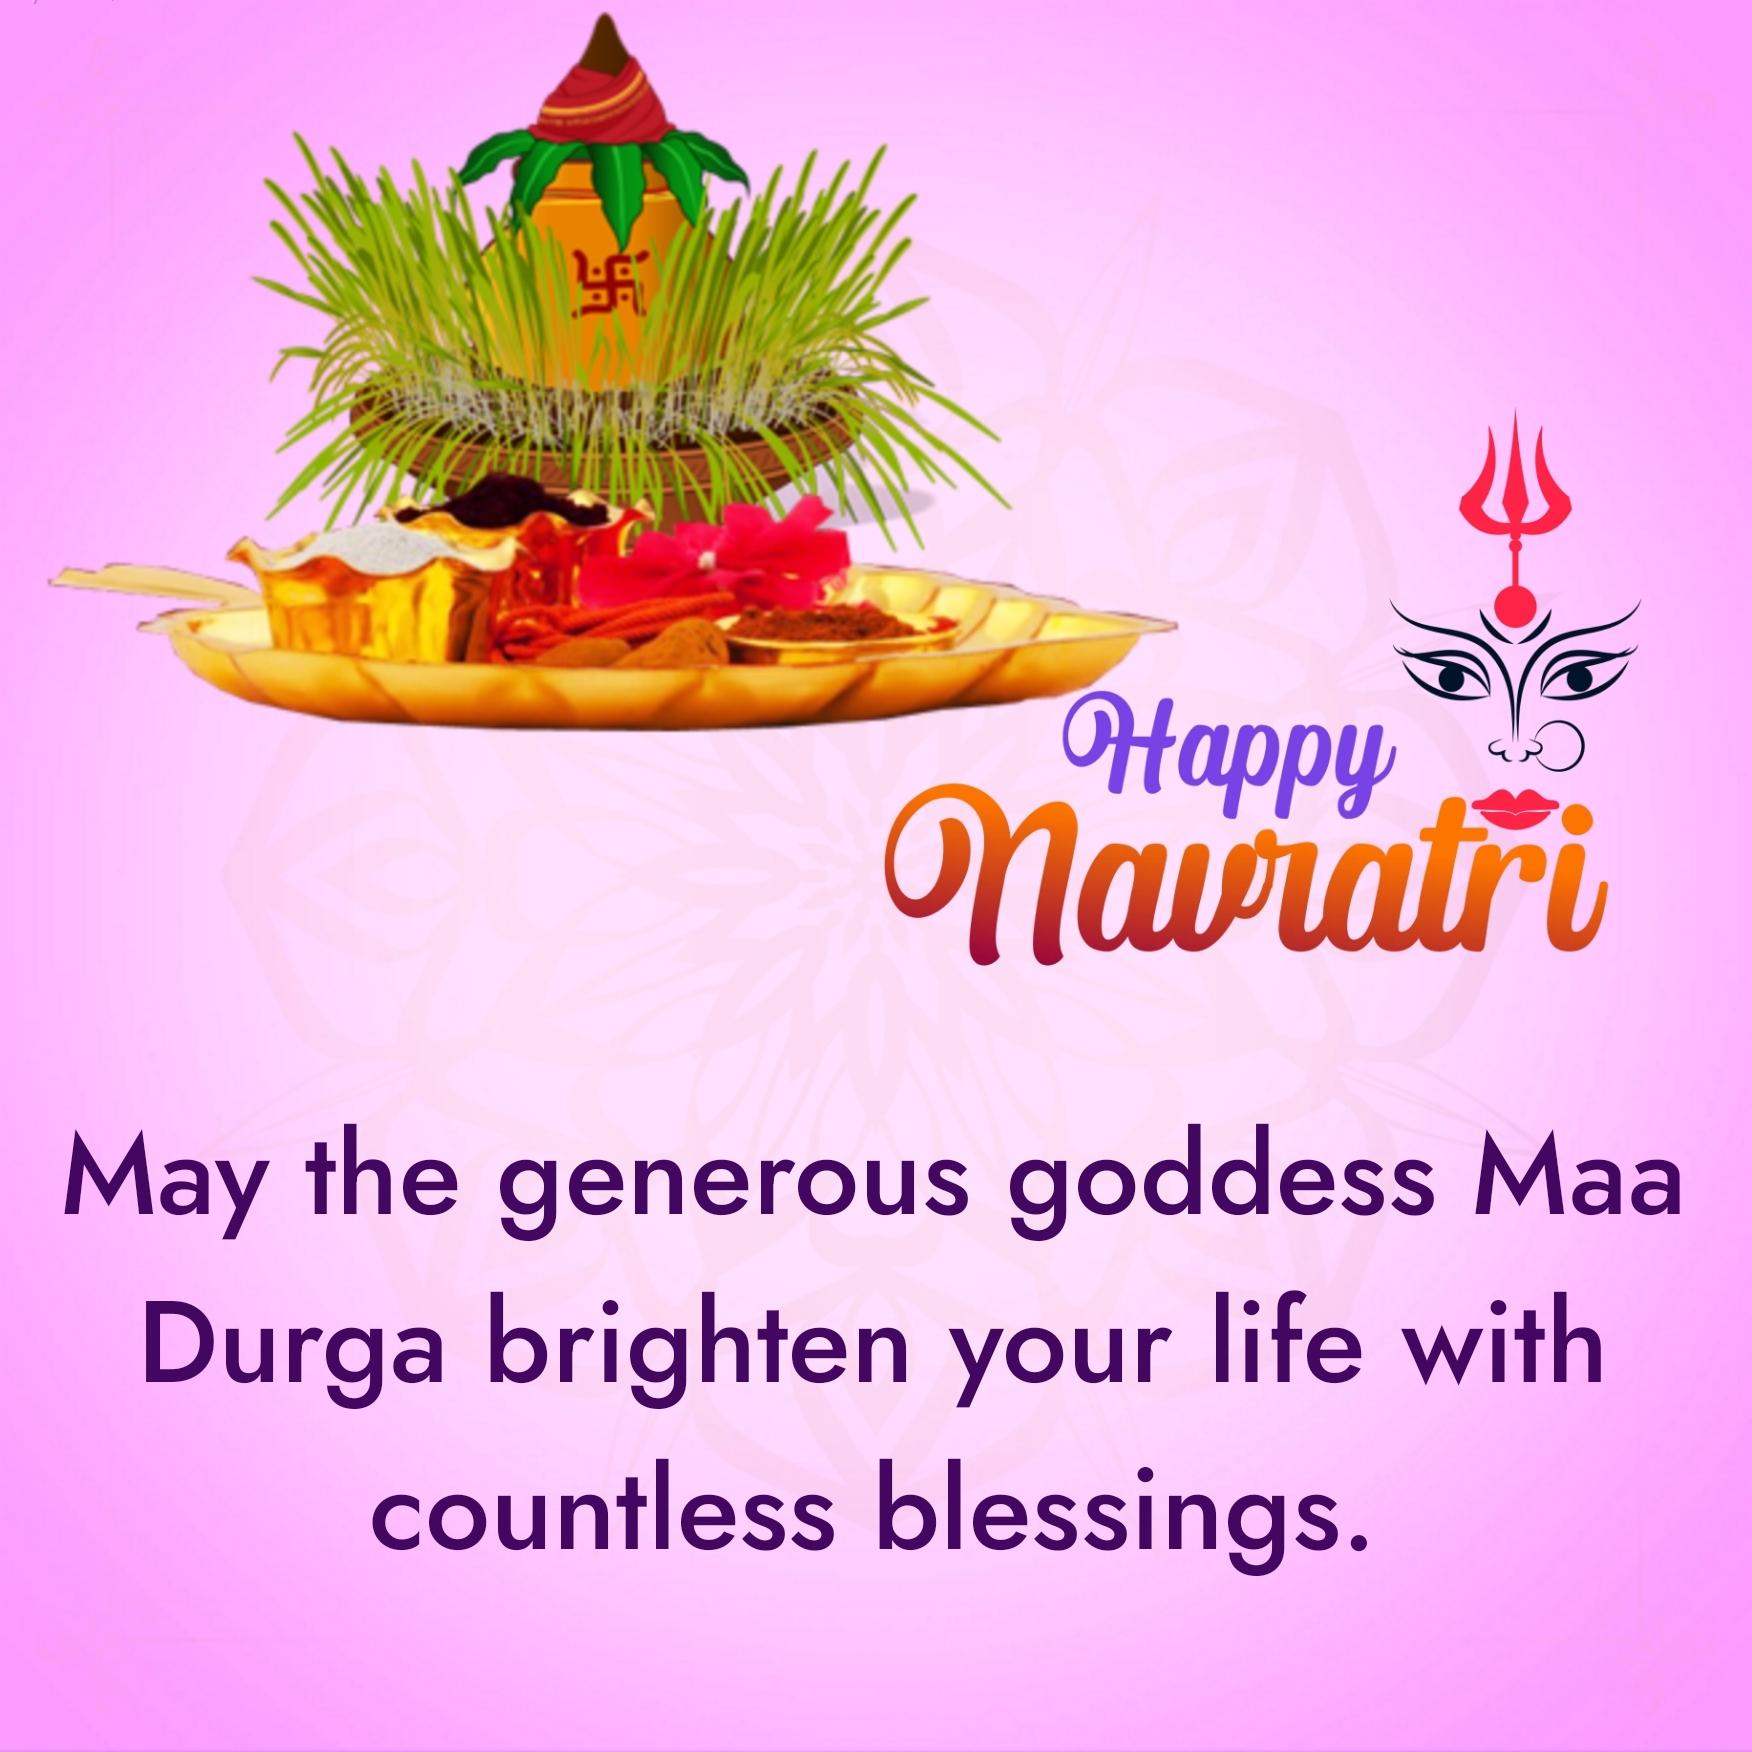 May the generous goddess Maa Durga brighten your life